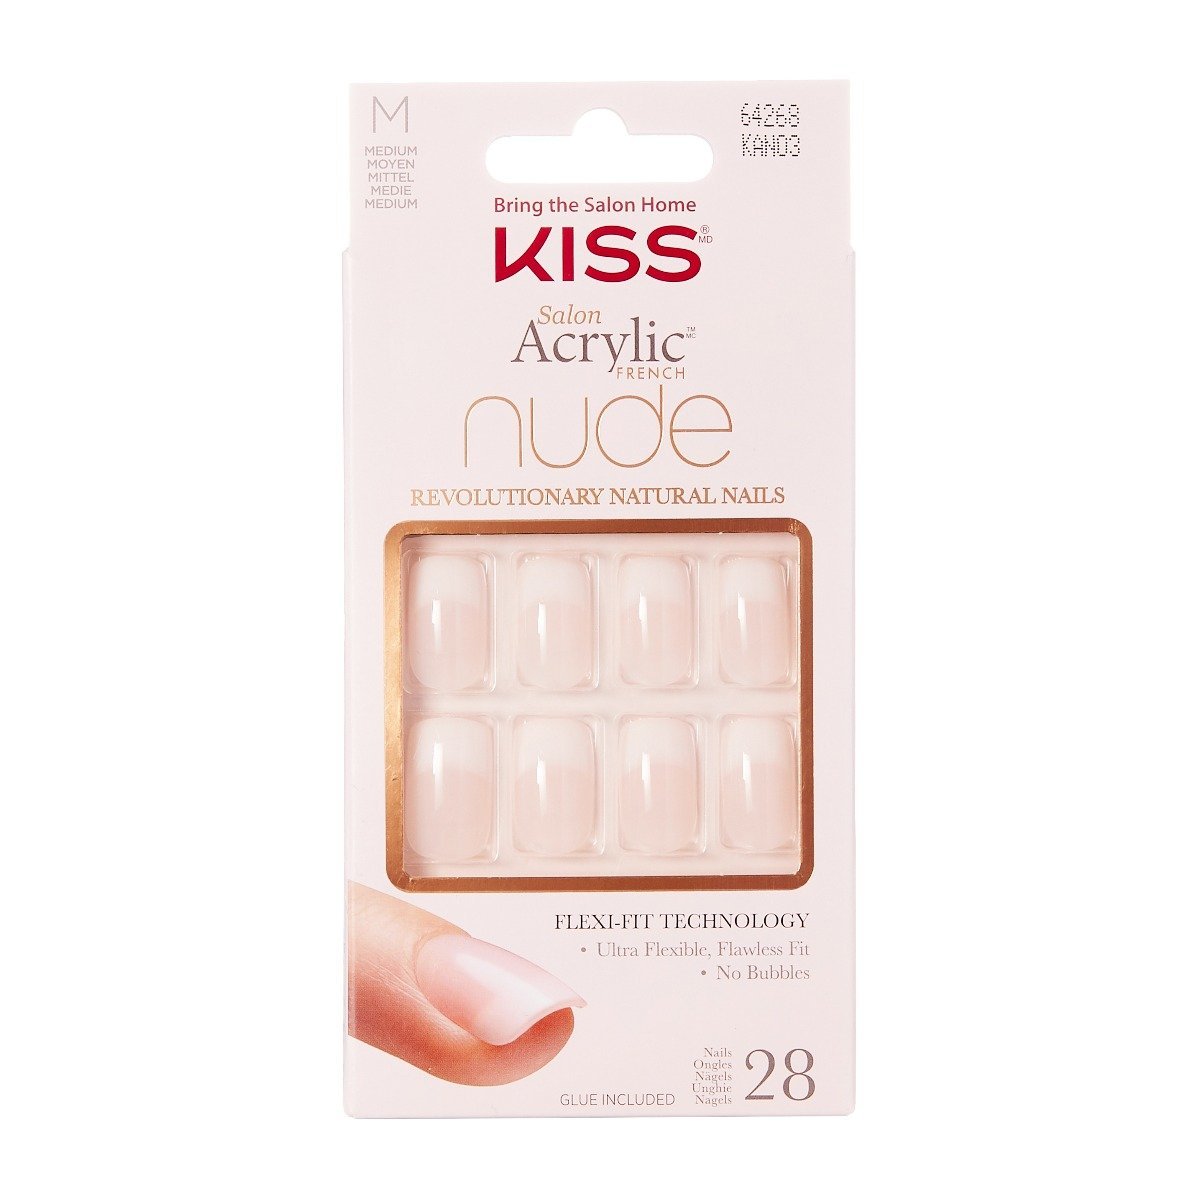 Kiss Salon Acrylic Nude Medium Nails KAN03 - 64268 - Bloom Pharmacy